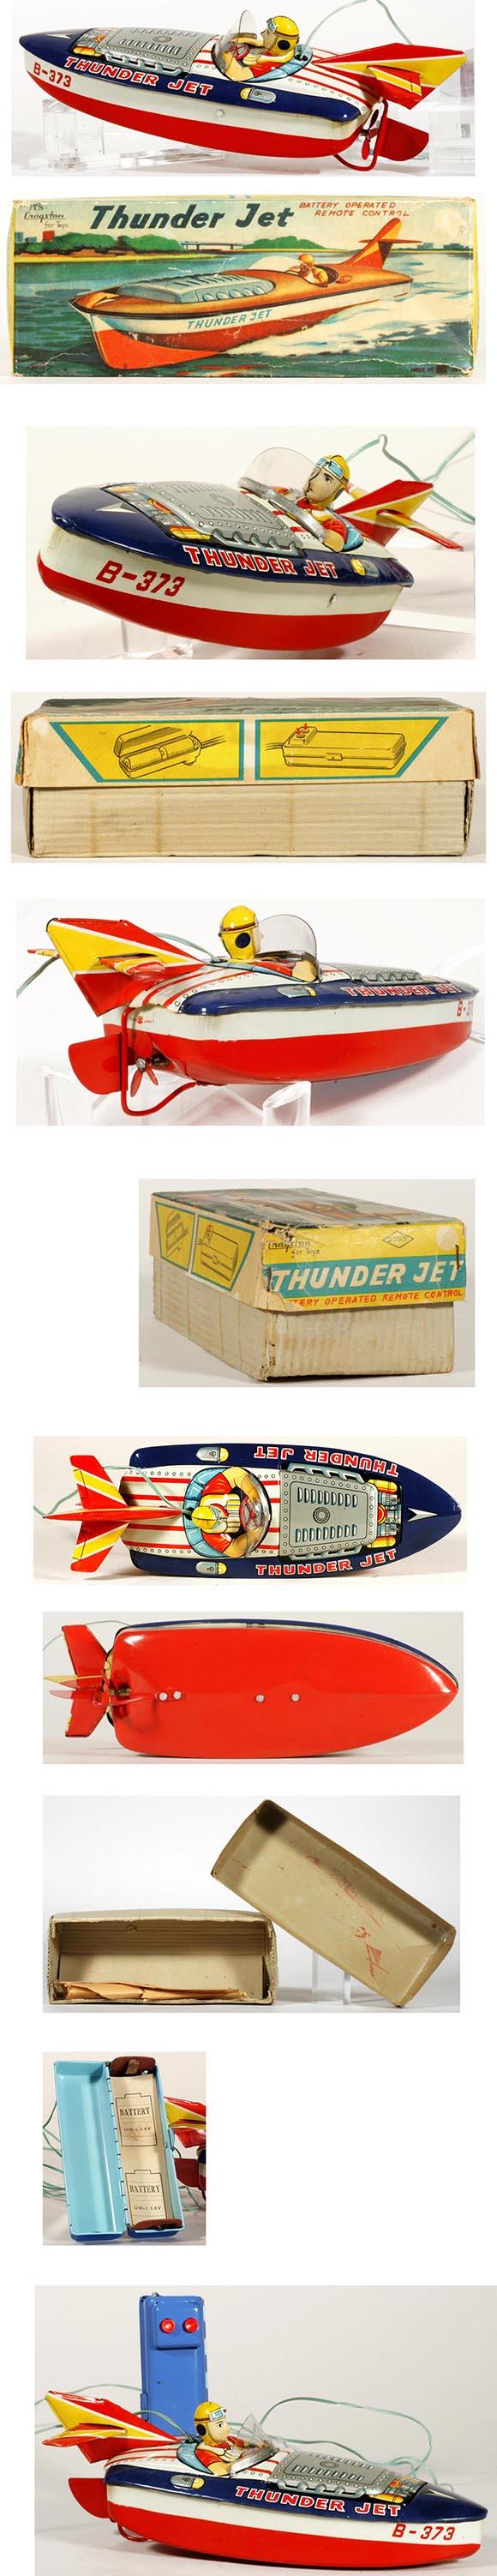 c.1957 Bandai, Thunder Jet Speed Boat in Original Box